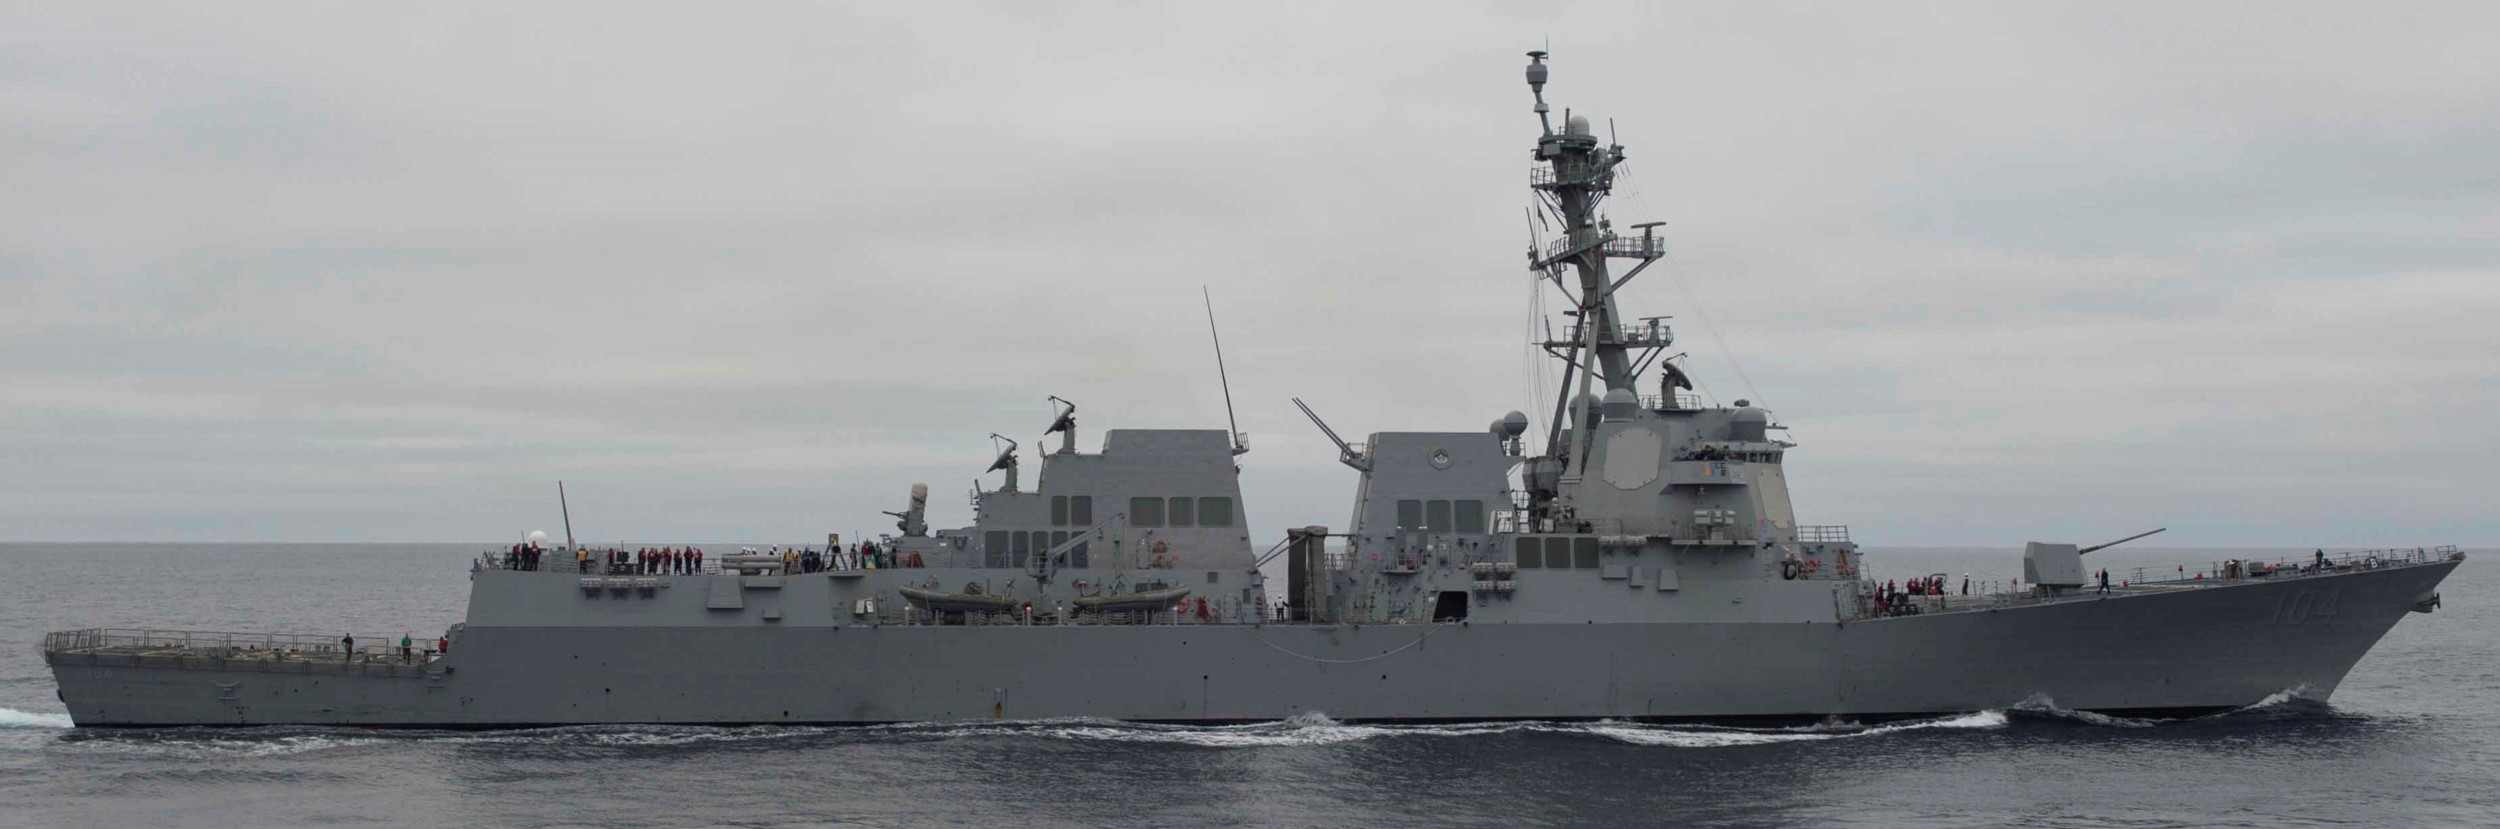 ddg-104 uss sterett arleigh burke class guided missile destroyer aegis us navy 17